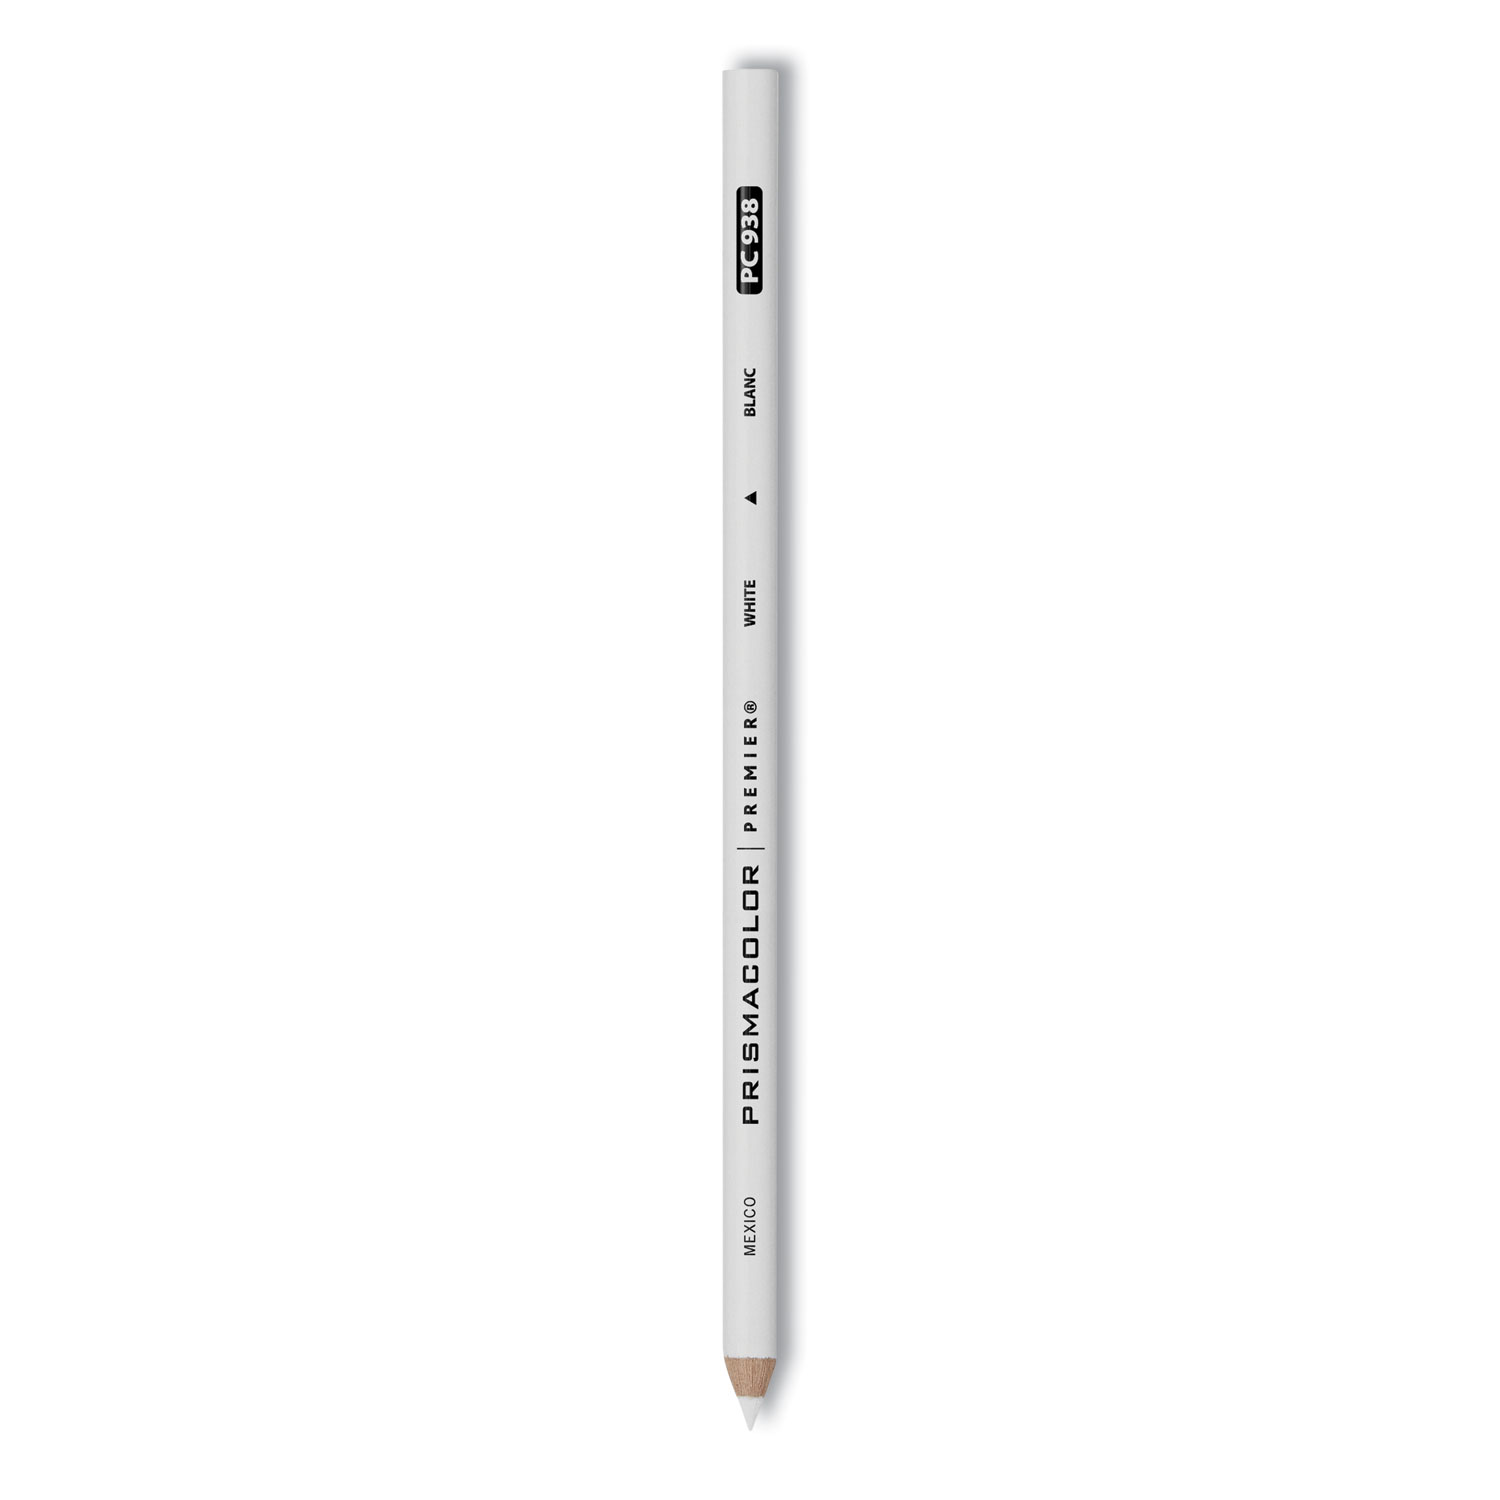 Prismacolor Premier Colored Pencils A Art — Art Department LLC